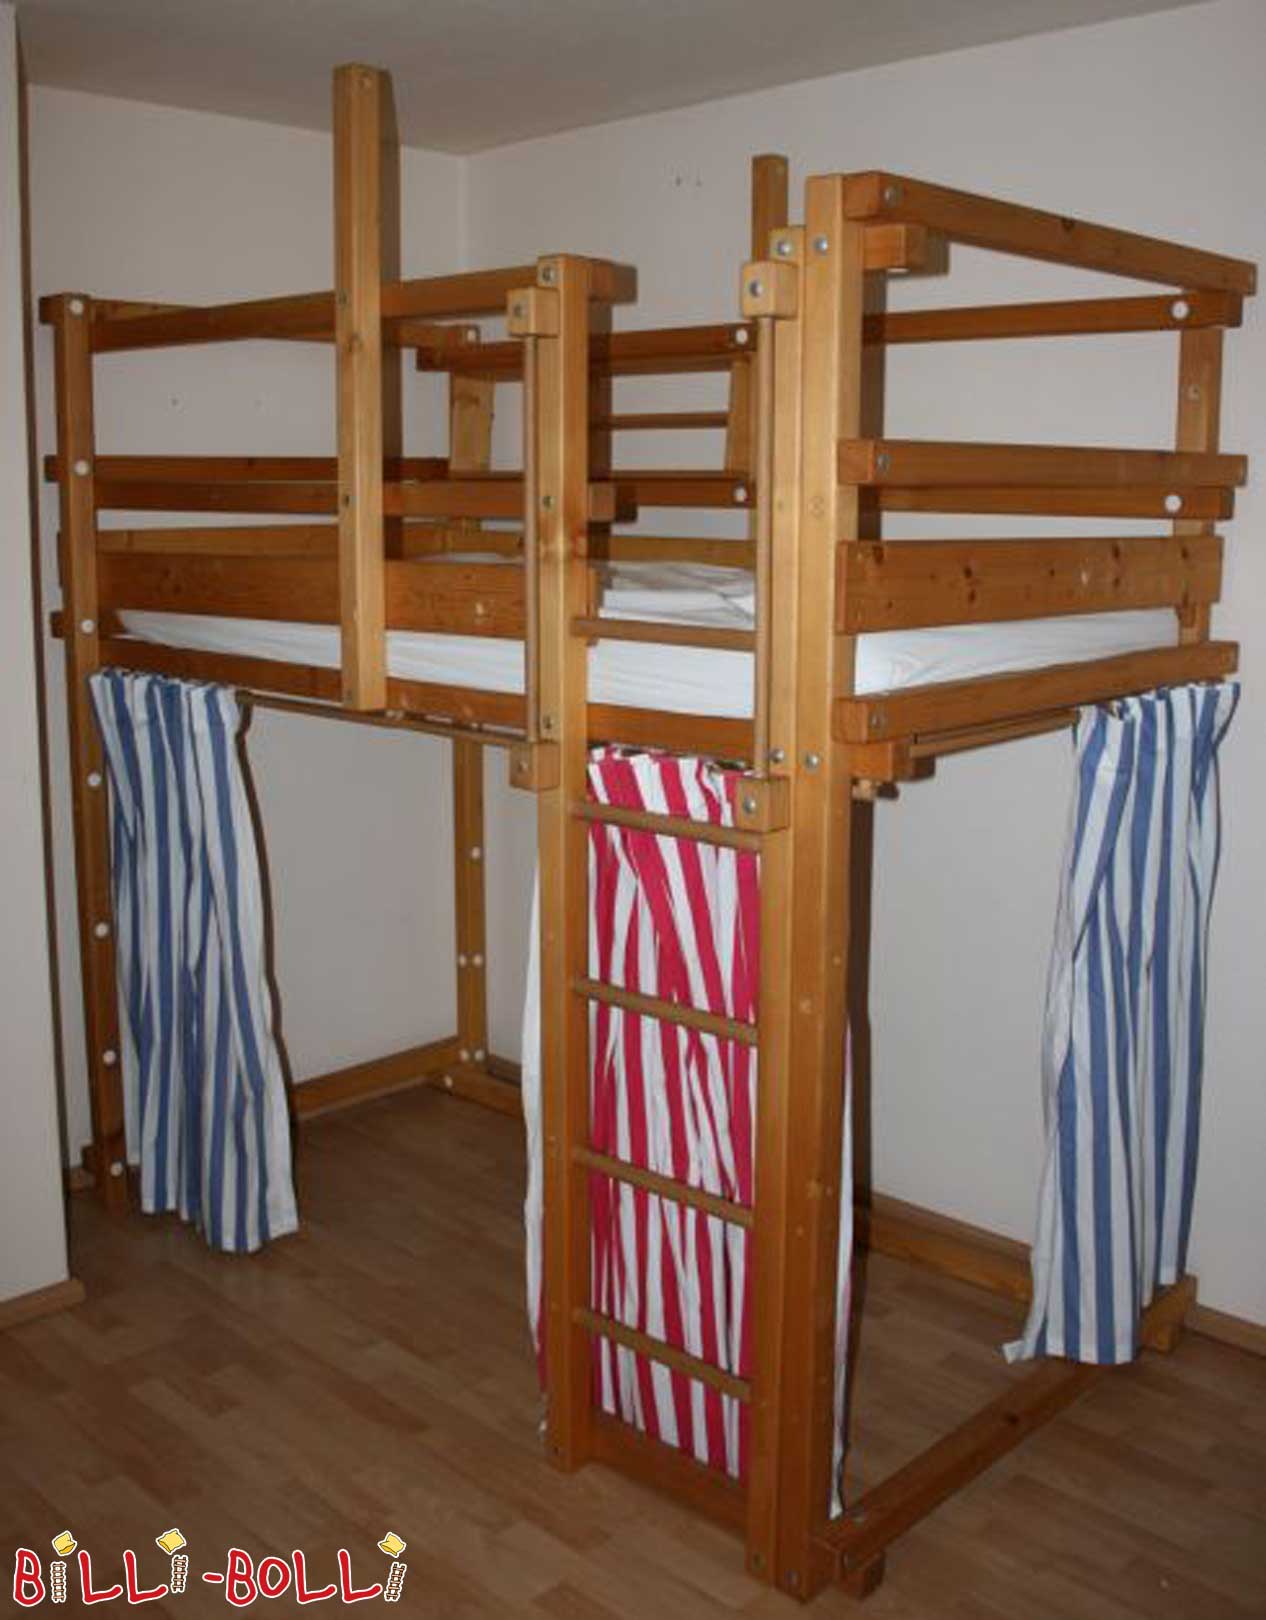 Original Billi-Bolli loft bed (Category: second hand loft bed)